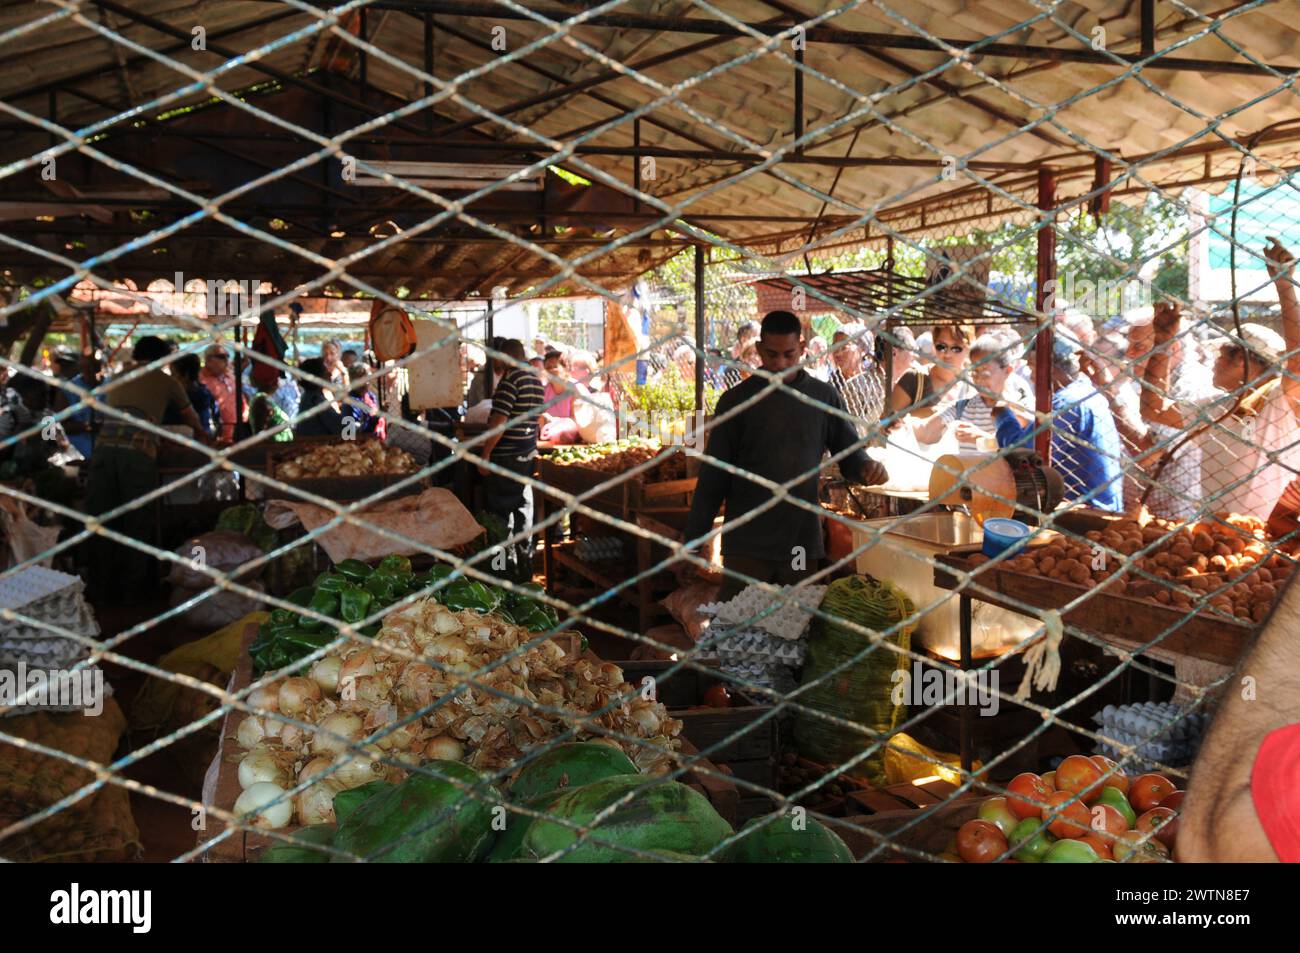 Bauernmarkt in Havanna. Farmers market in Havanna-City. Stock Photo